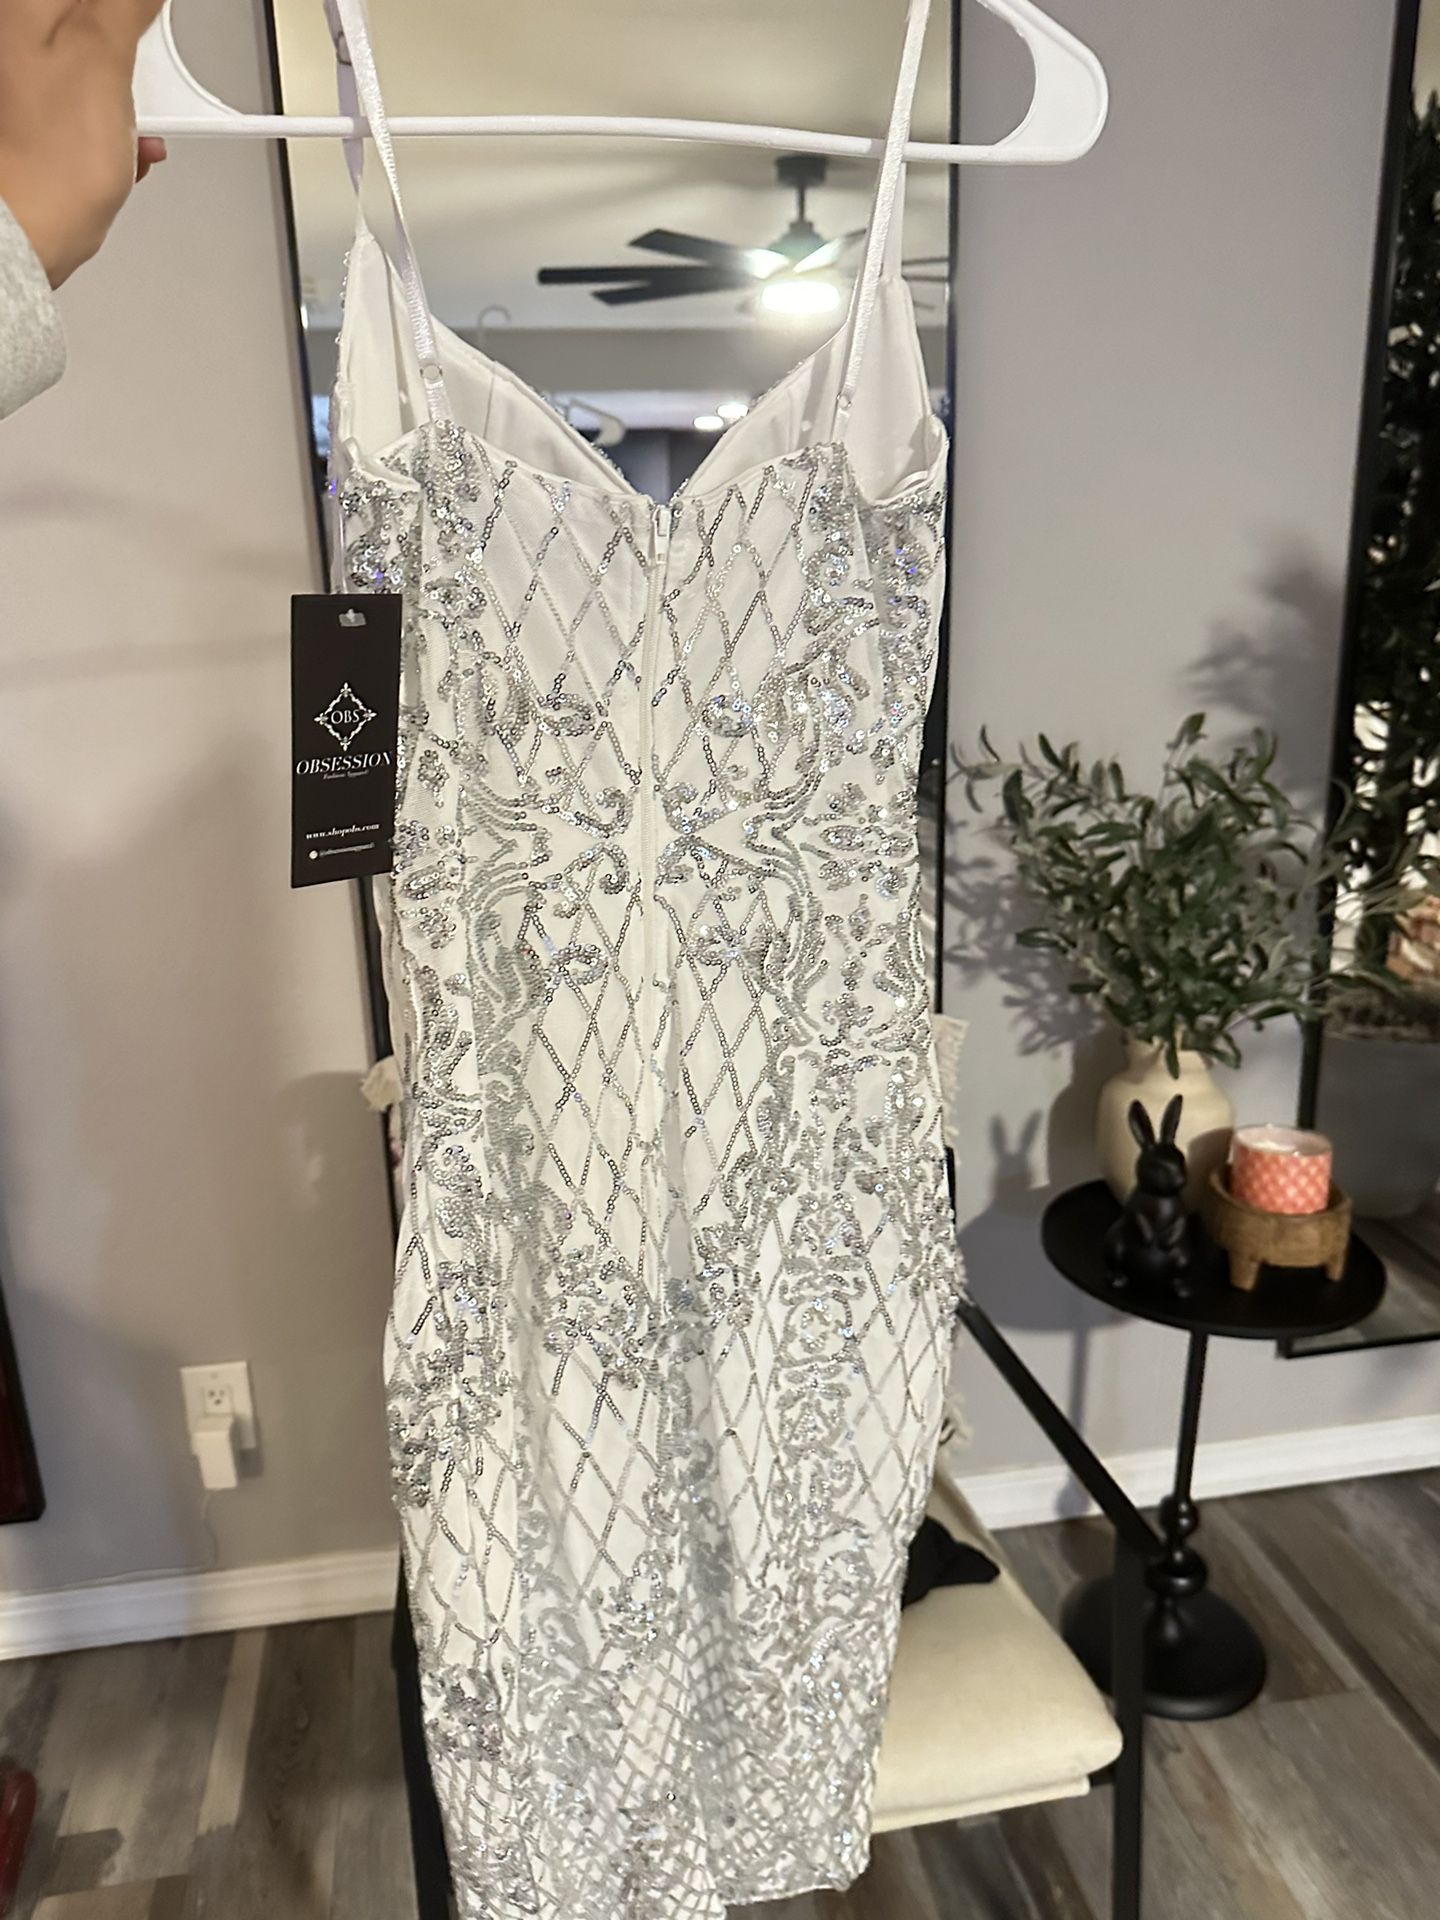 White & Sliver Dress 